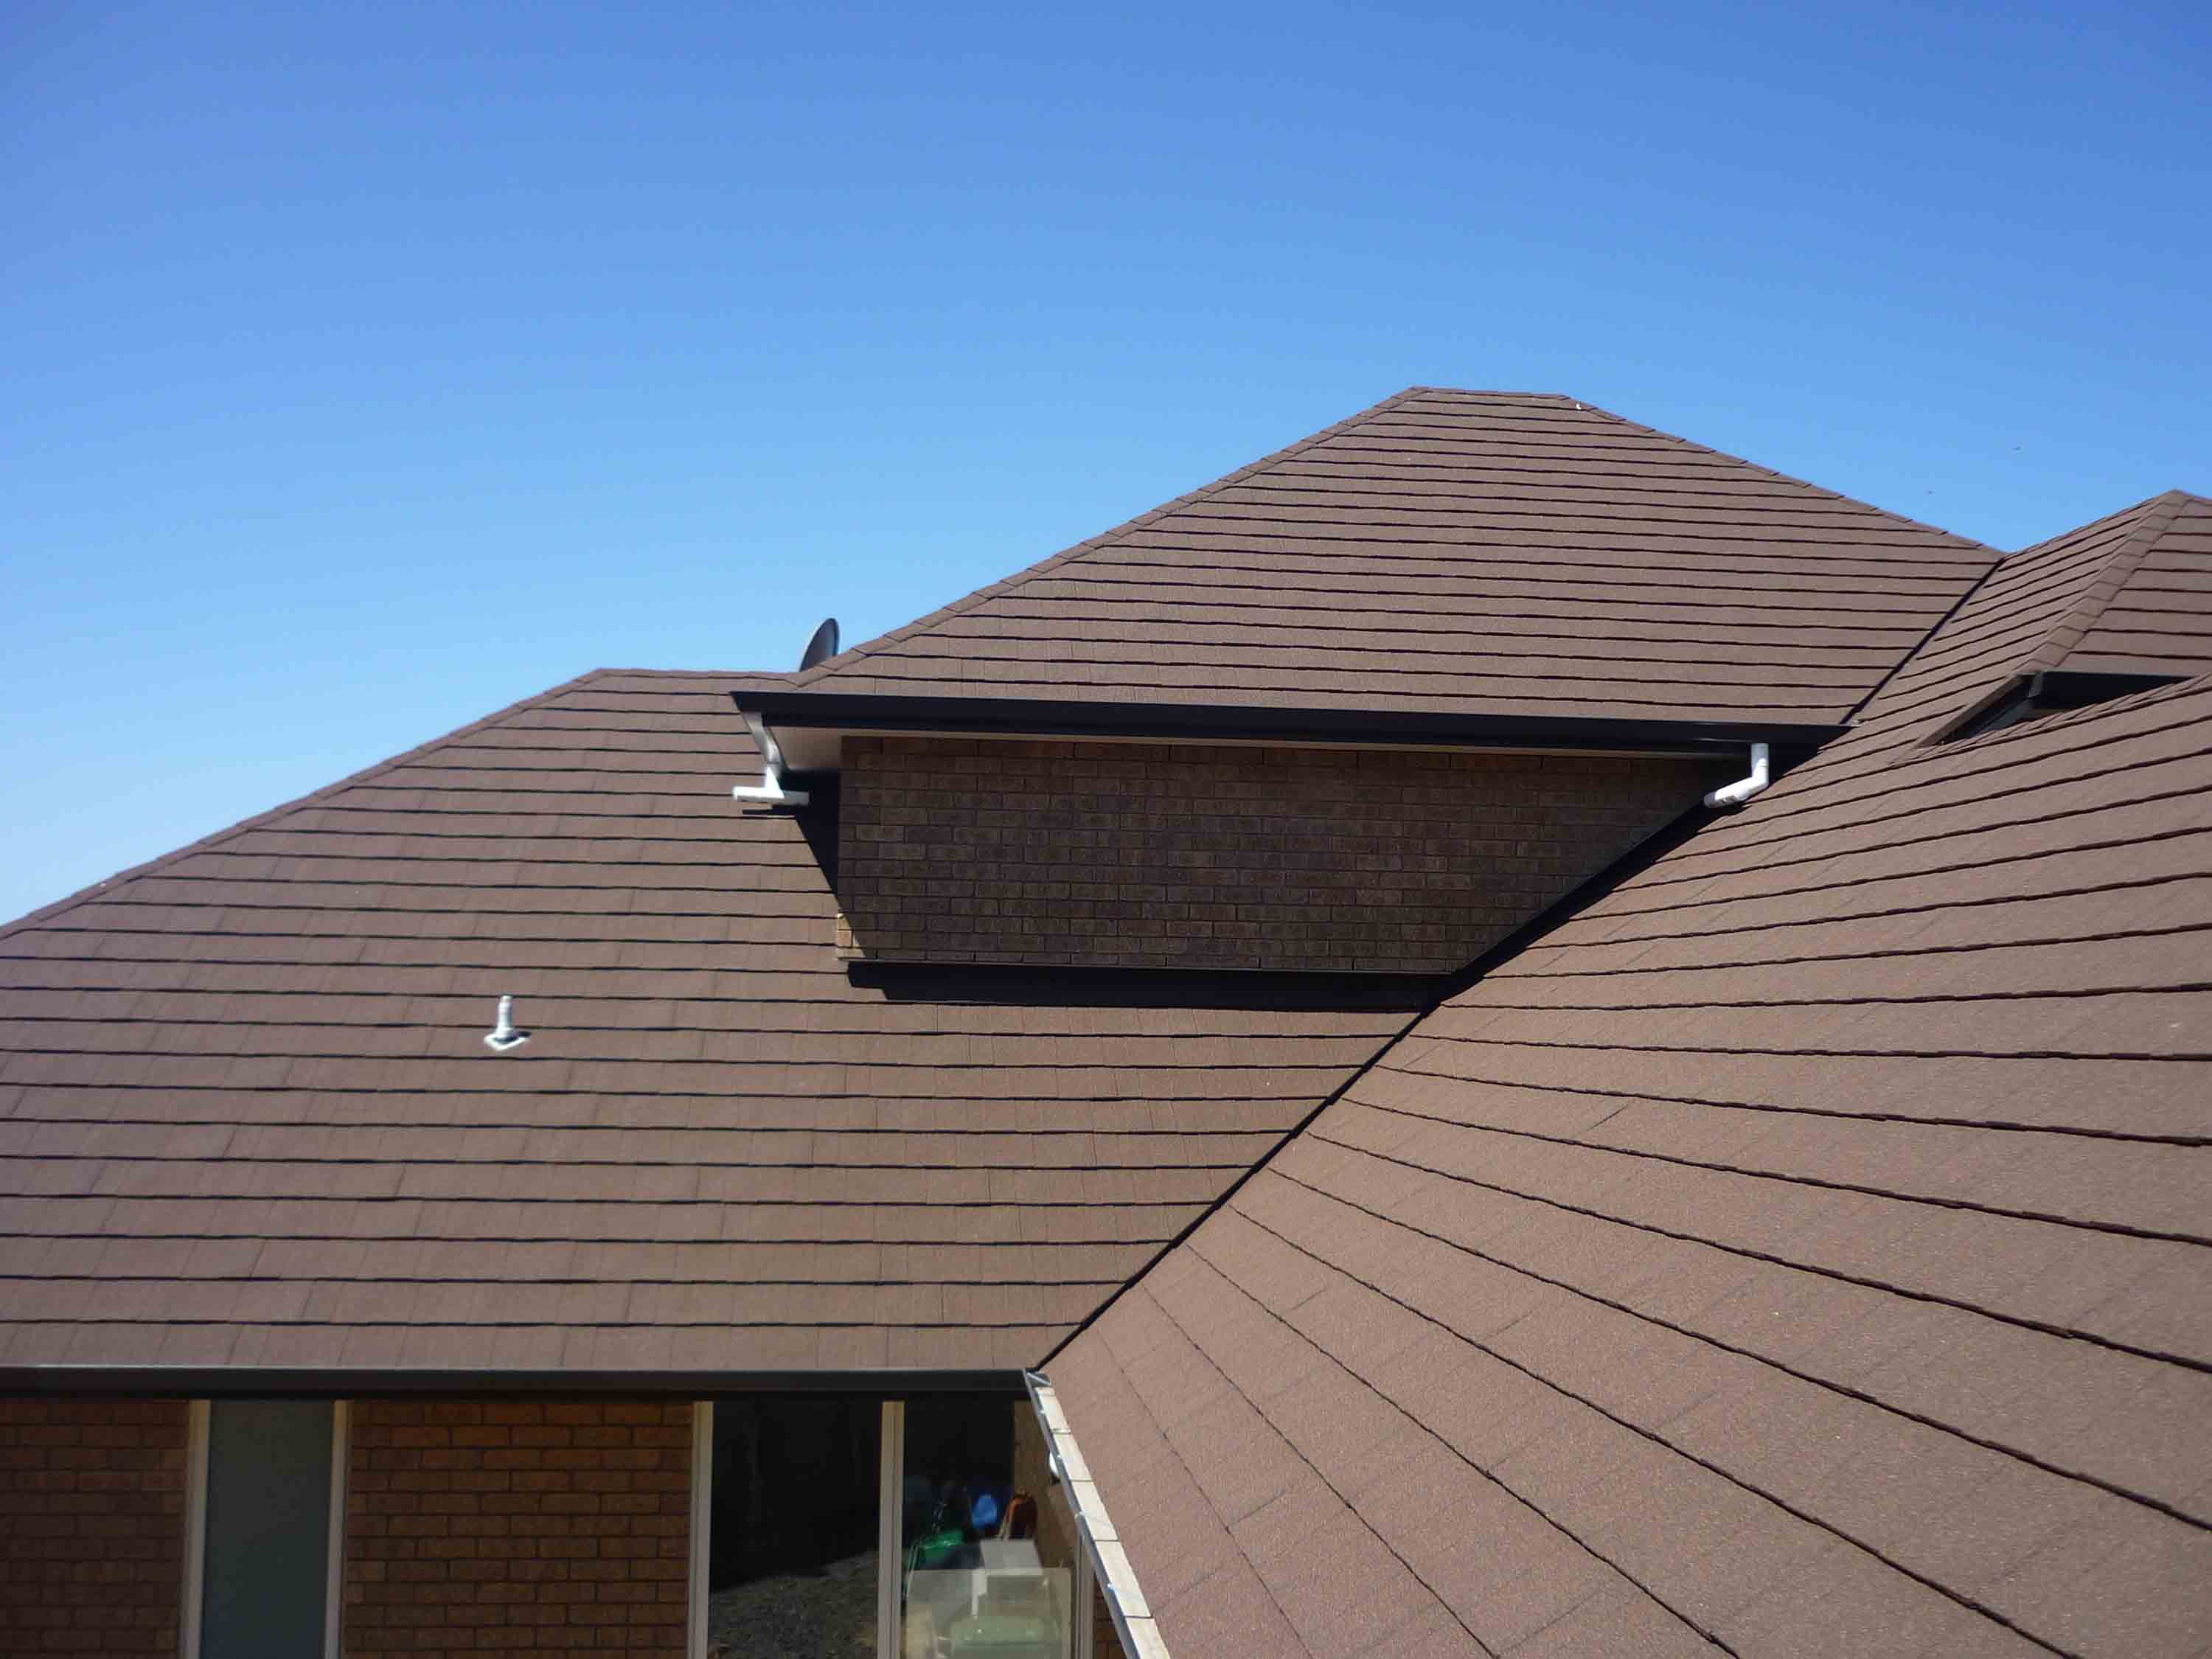 Home roofed in CF Slate metal panels.